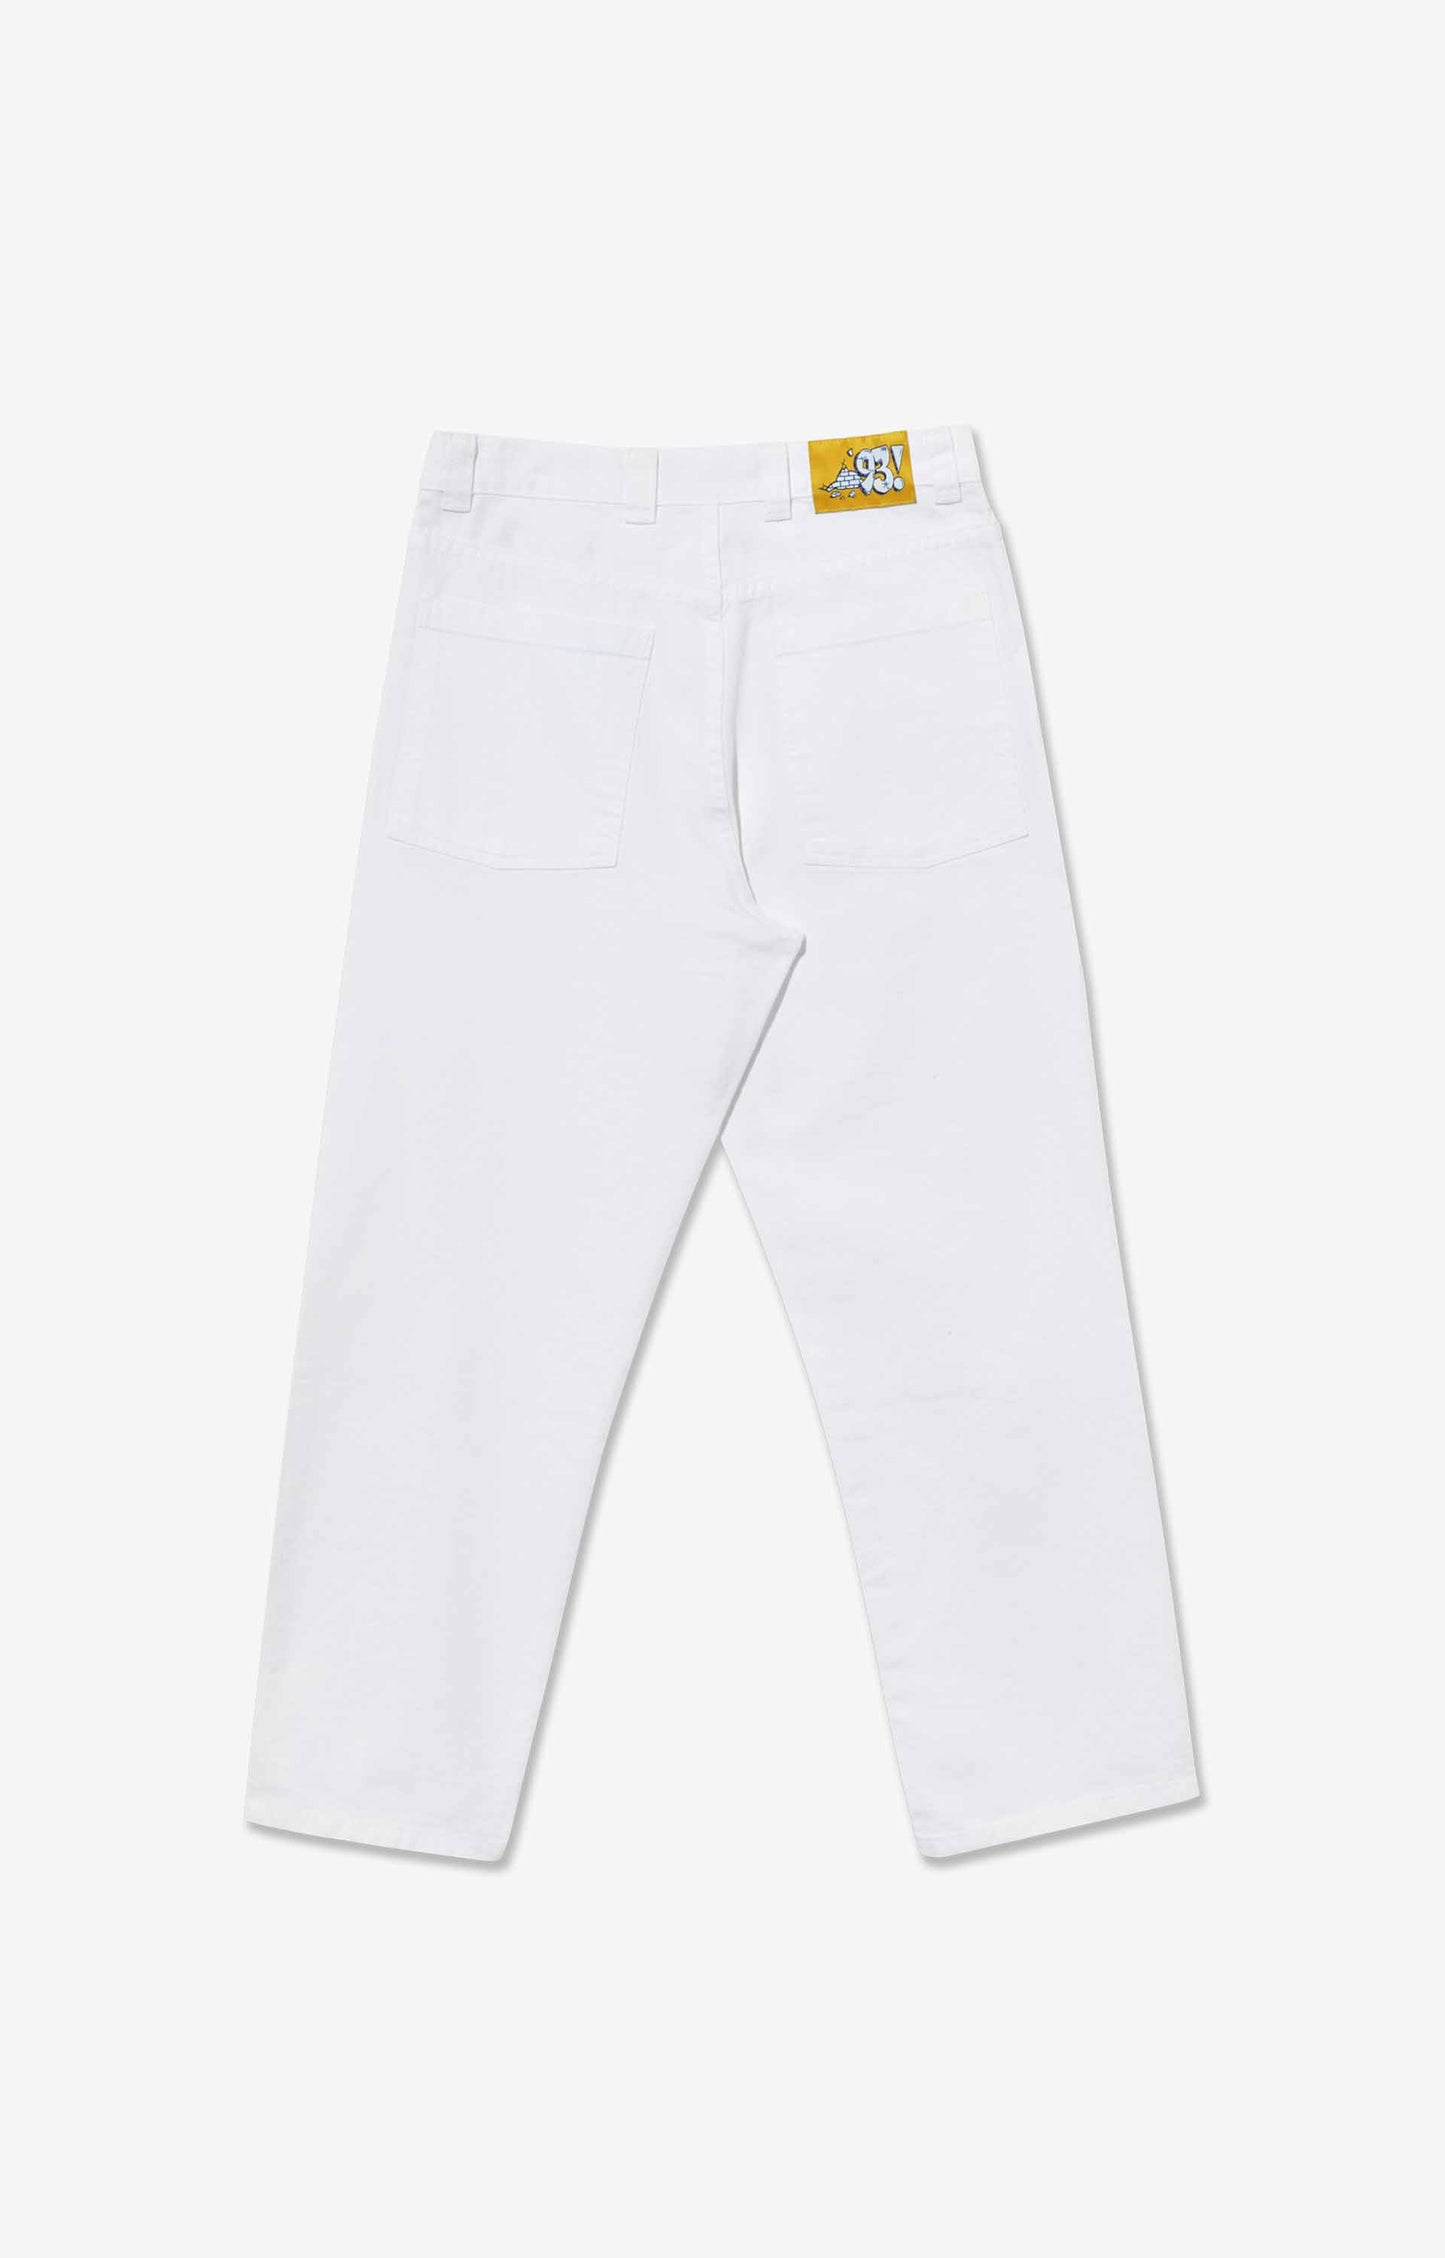 Polar Skate Co '93! Work Pants, White